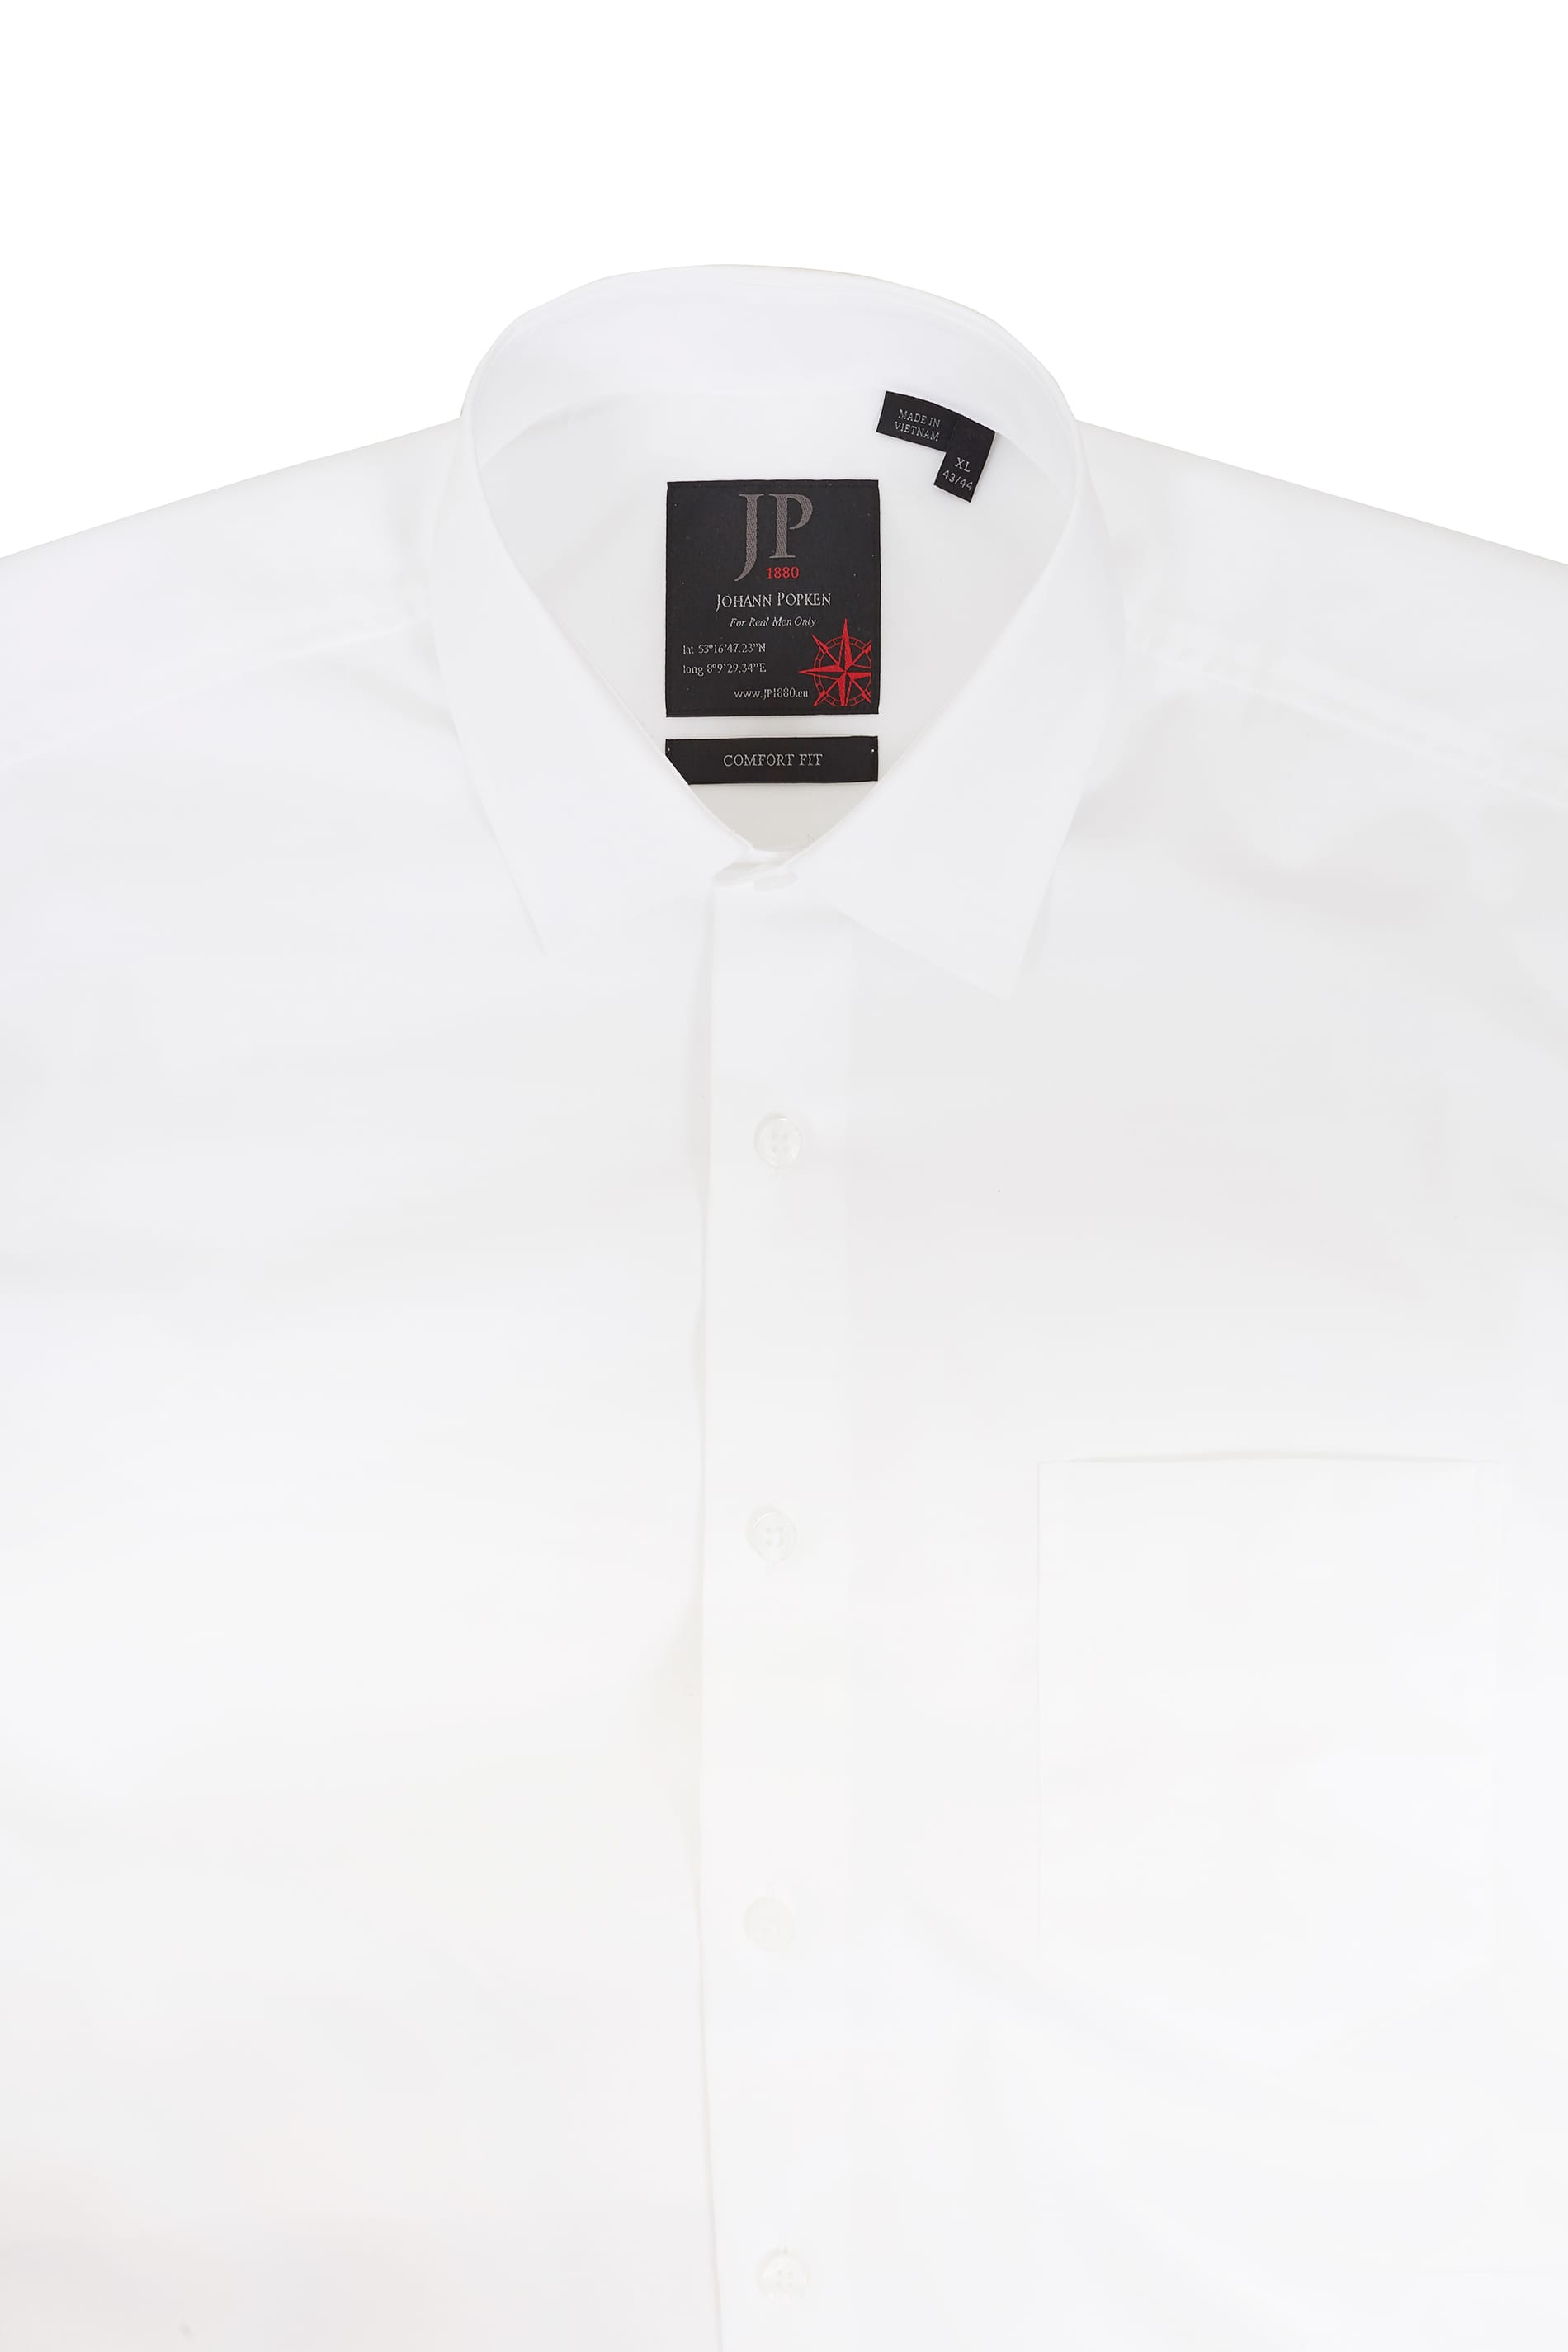 JP 1880 White Comfort Fit Shirt, Extra Large Sizes L, XL, 2XL, 3XL, 4XL ...